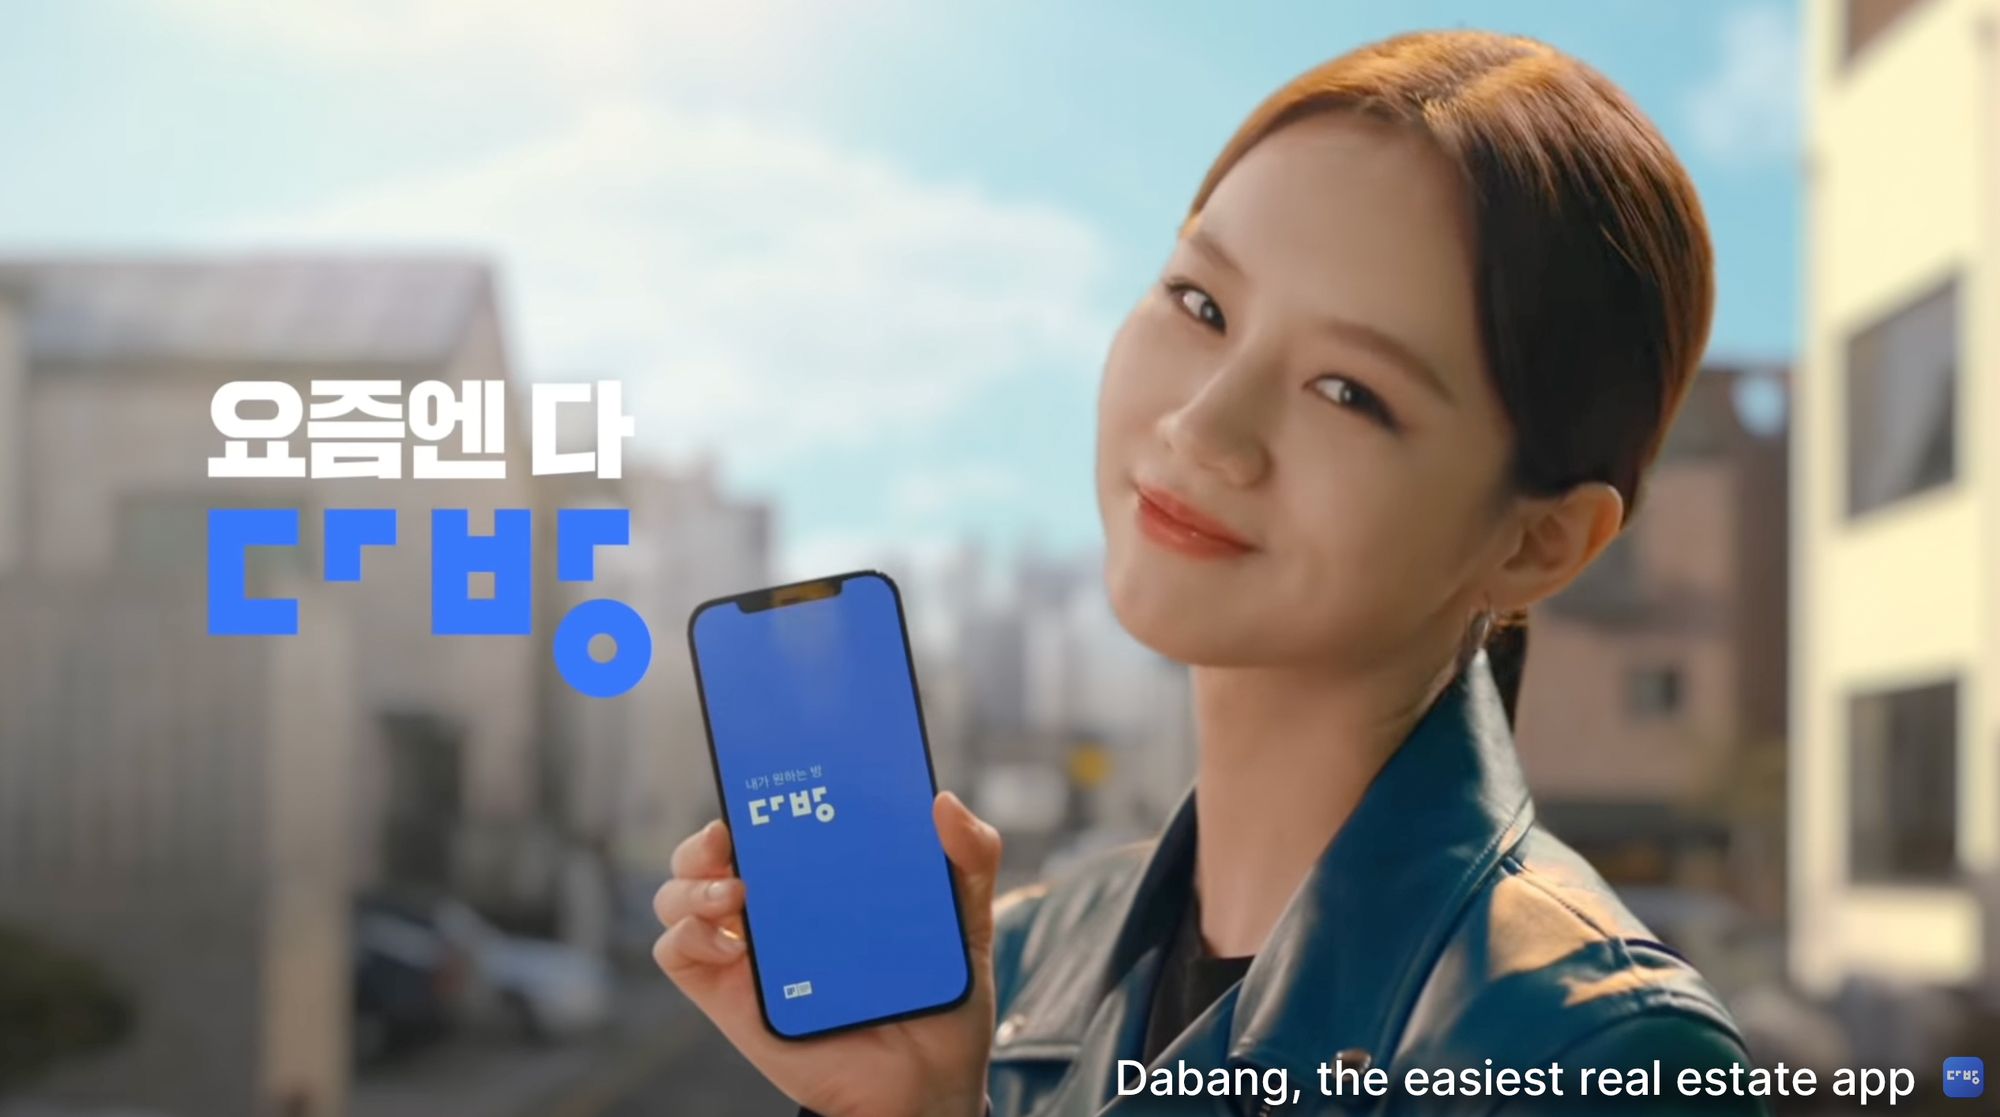 TV advertisement scene of the real estate app, Dabang